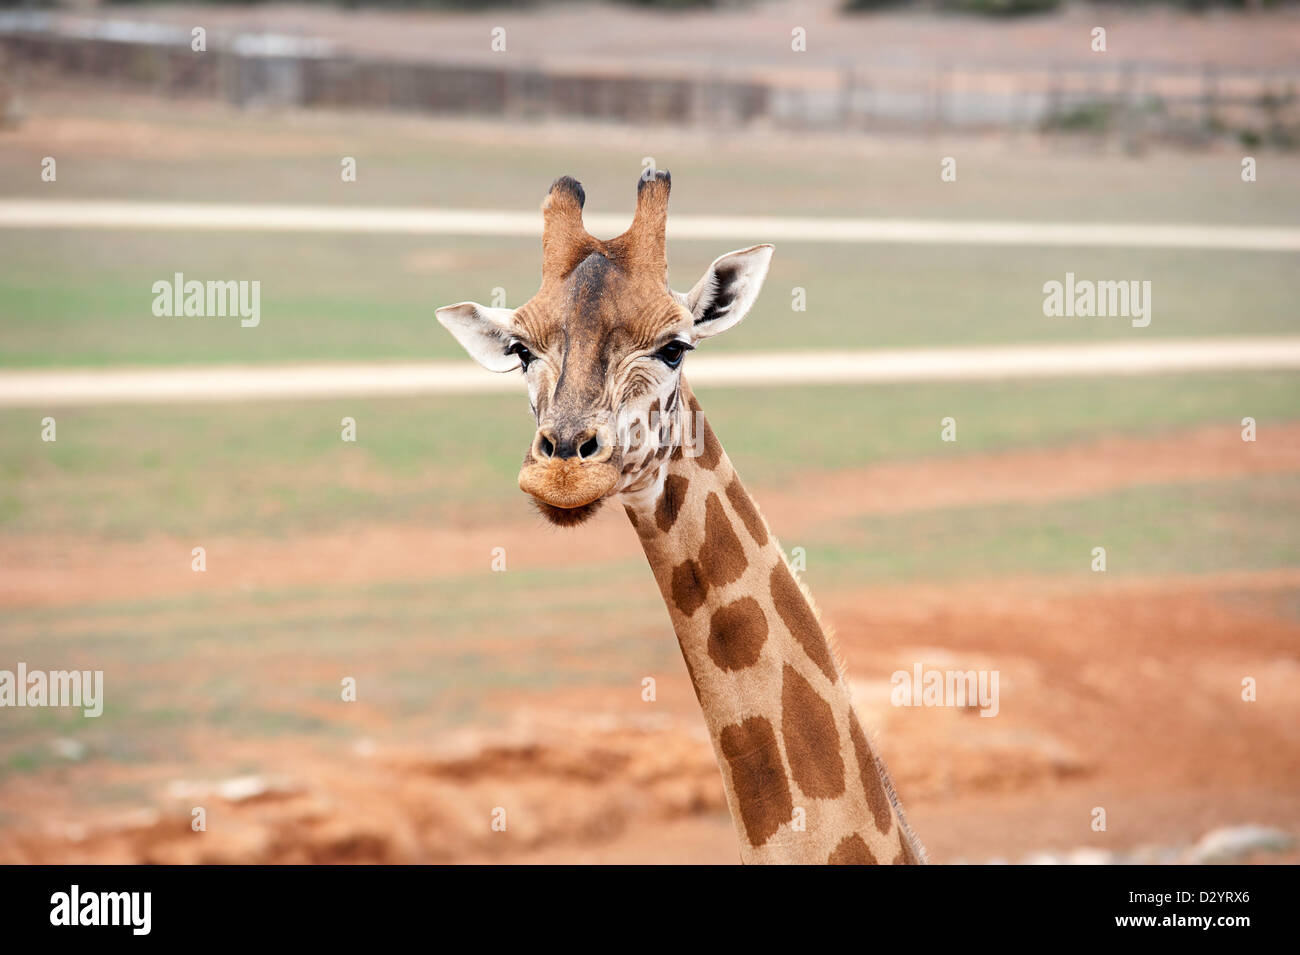 A closeup of a curious giraffe looking at the camera. Stock Photo